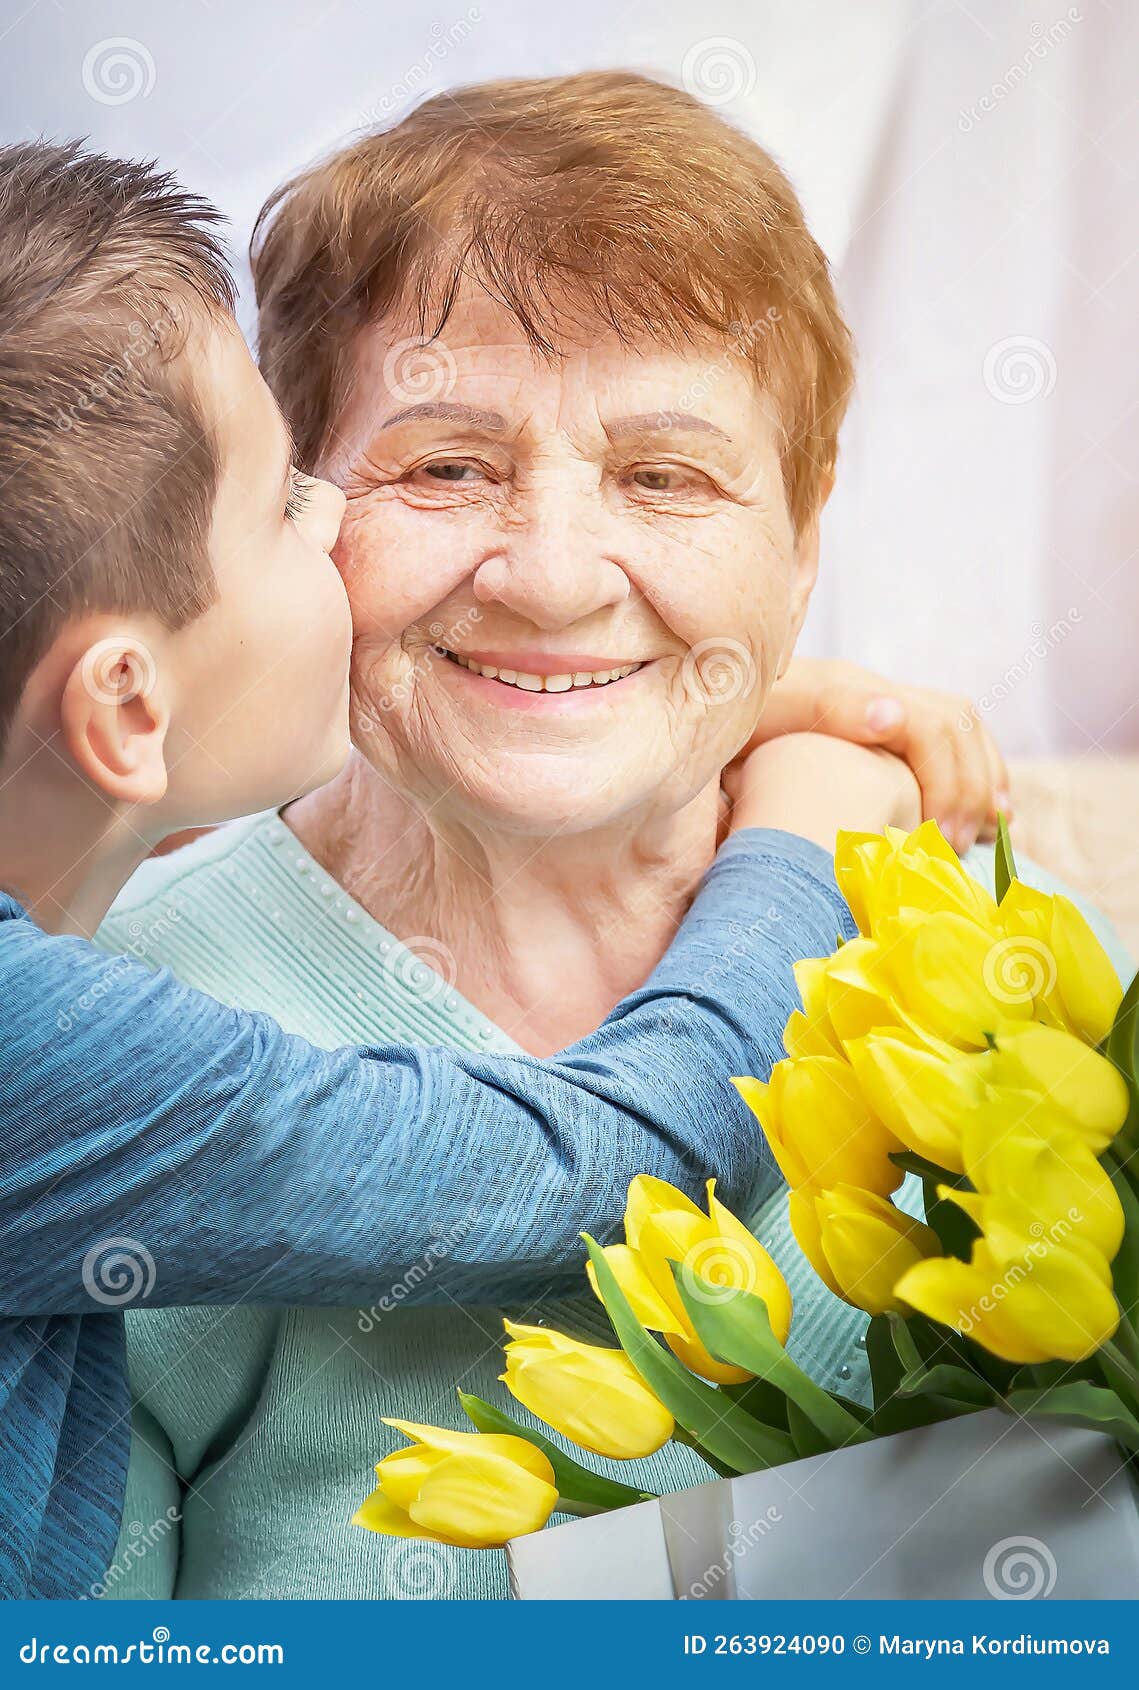 grandson congratulates grandma on holiday. grandmother has bunch of yellow flowers. kindness to senior woman.